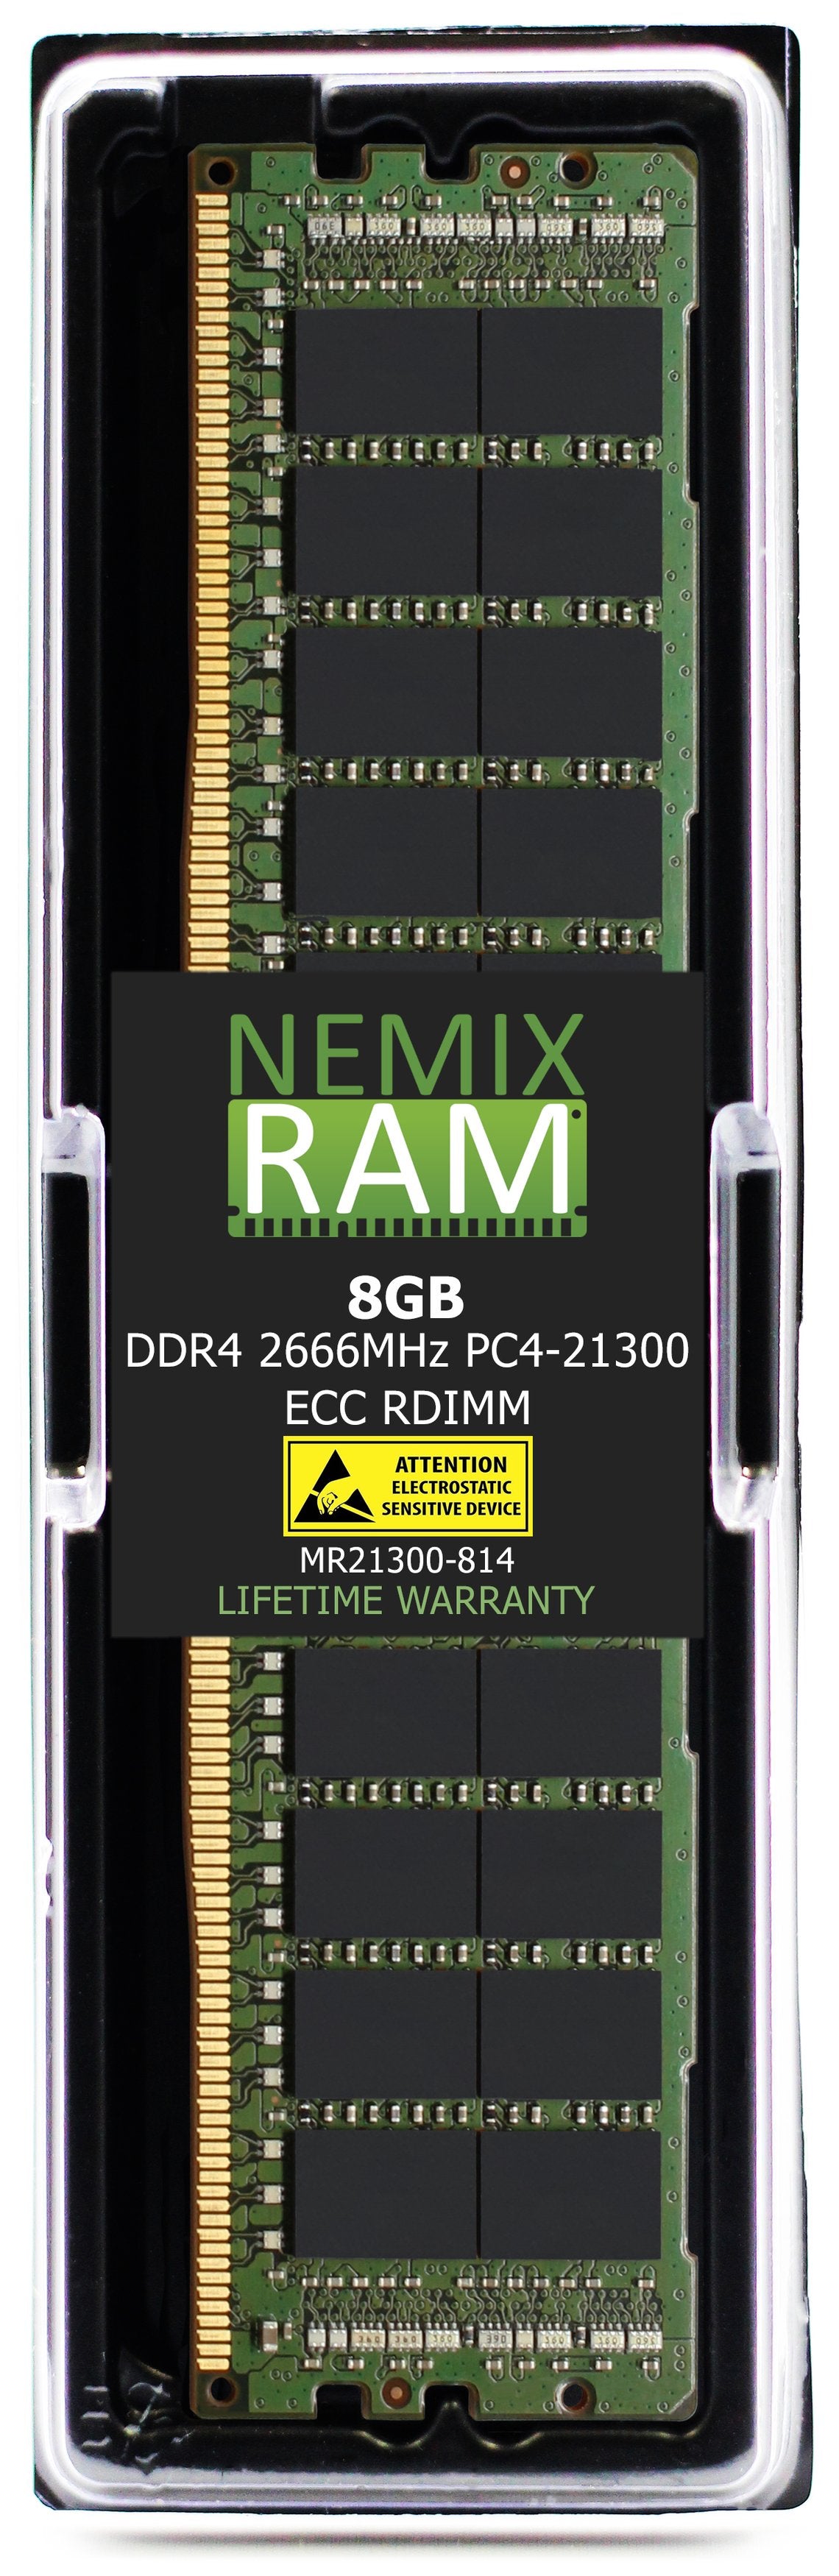 8GB DDR4 2666MHZ PC4-21300 RDIMM Compatible with Supermicro MEM-DR480L-SL02-ER26